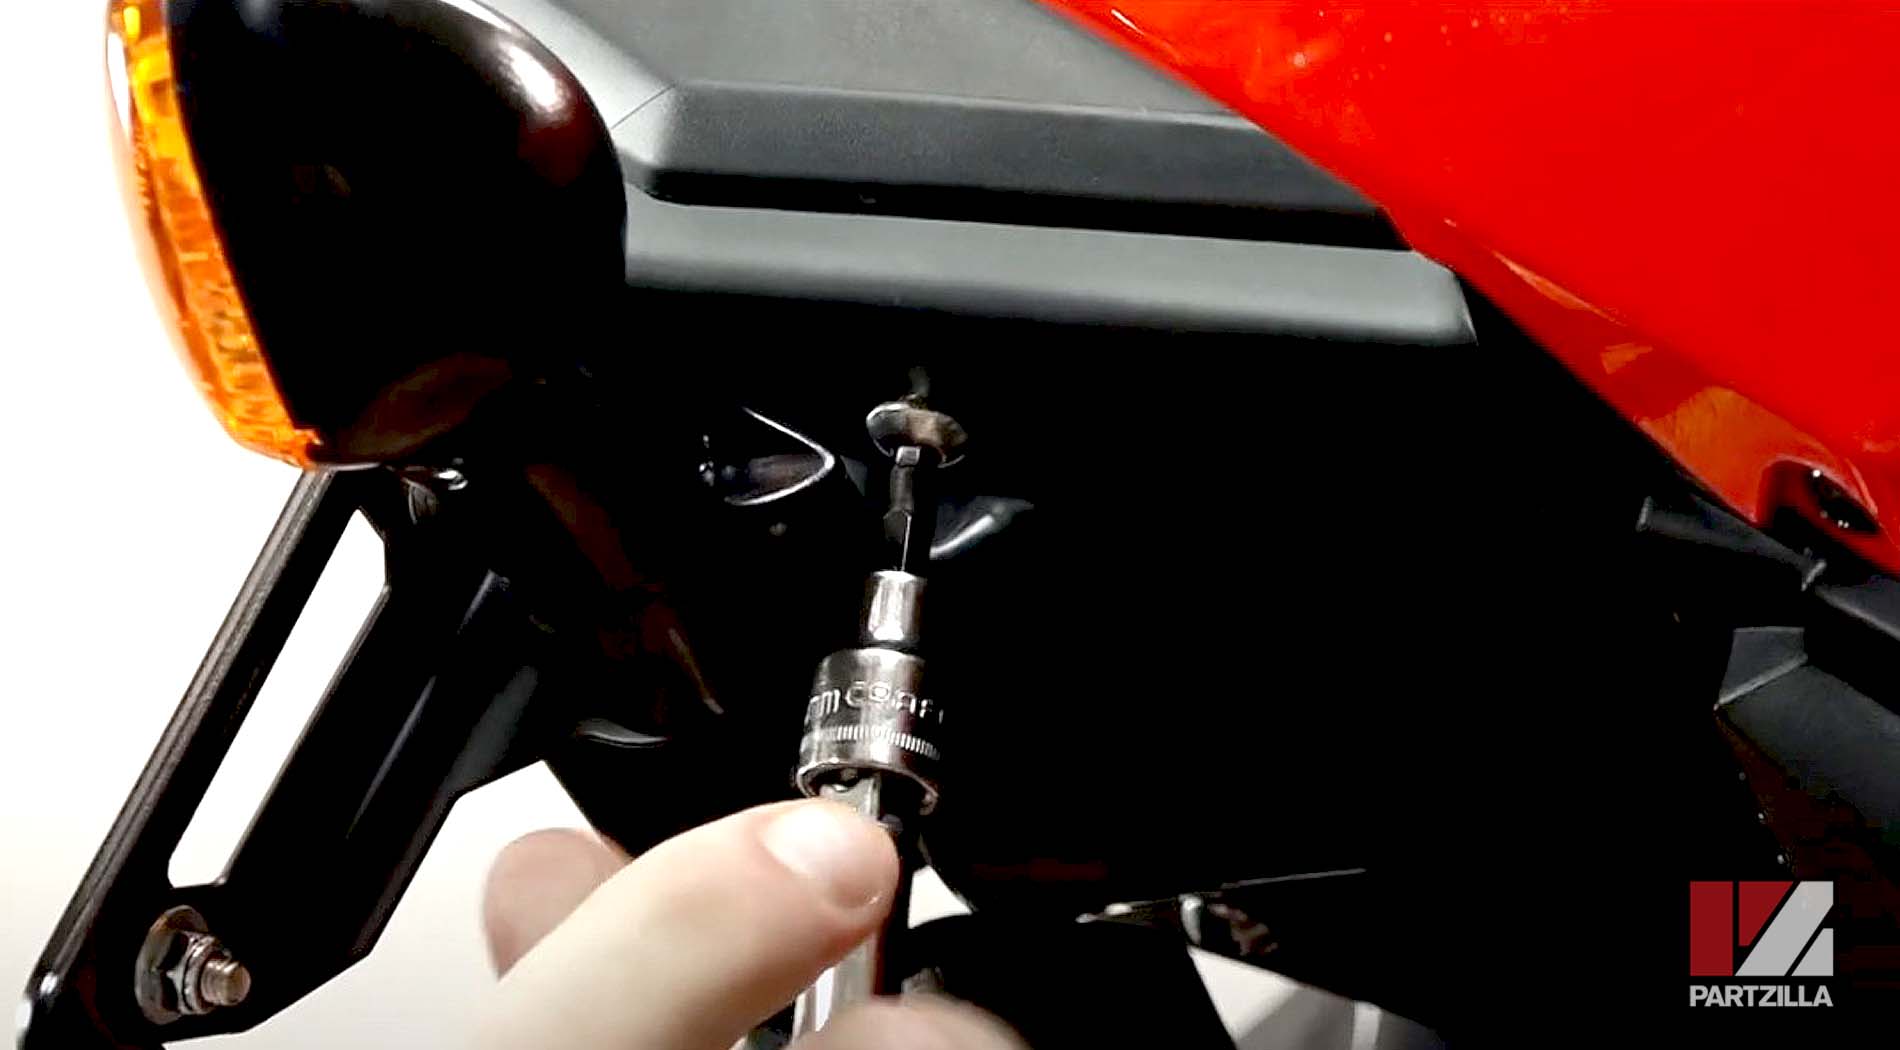 Honda Grom ABS rear fender eliminator kit upgrade